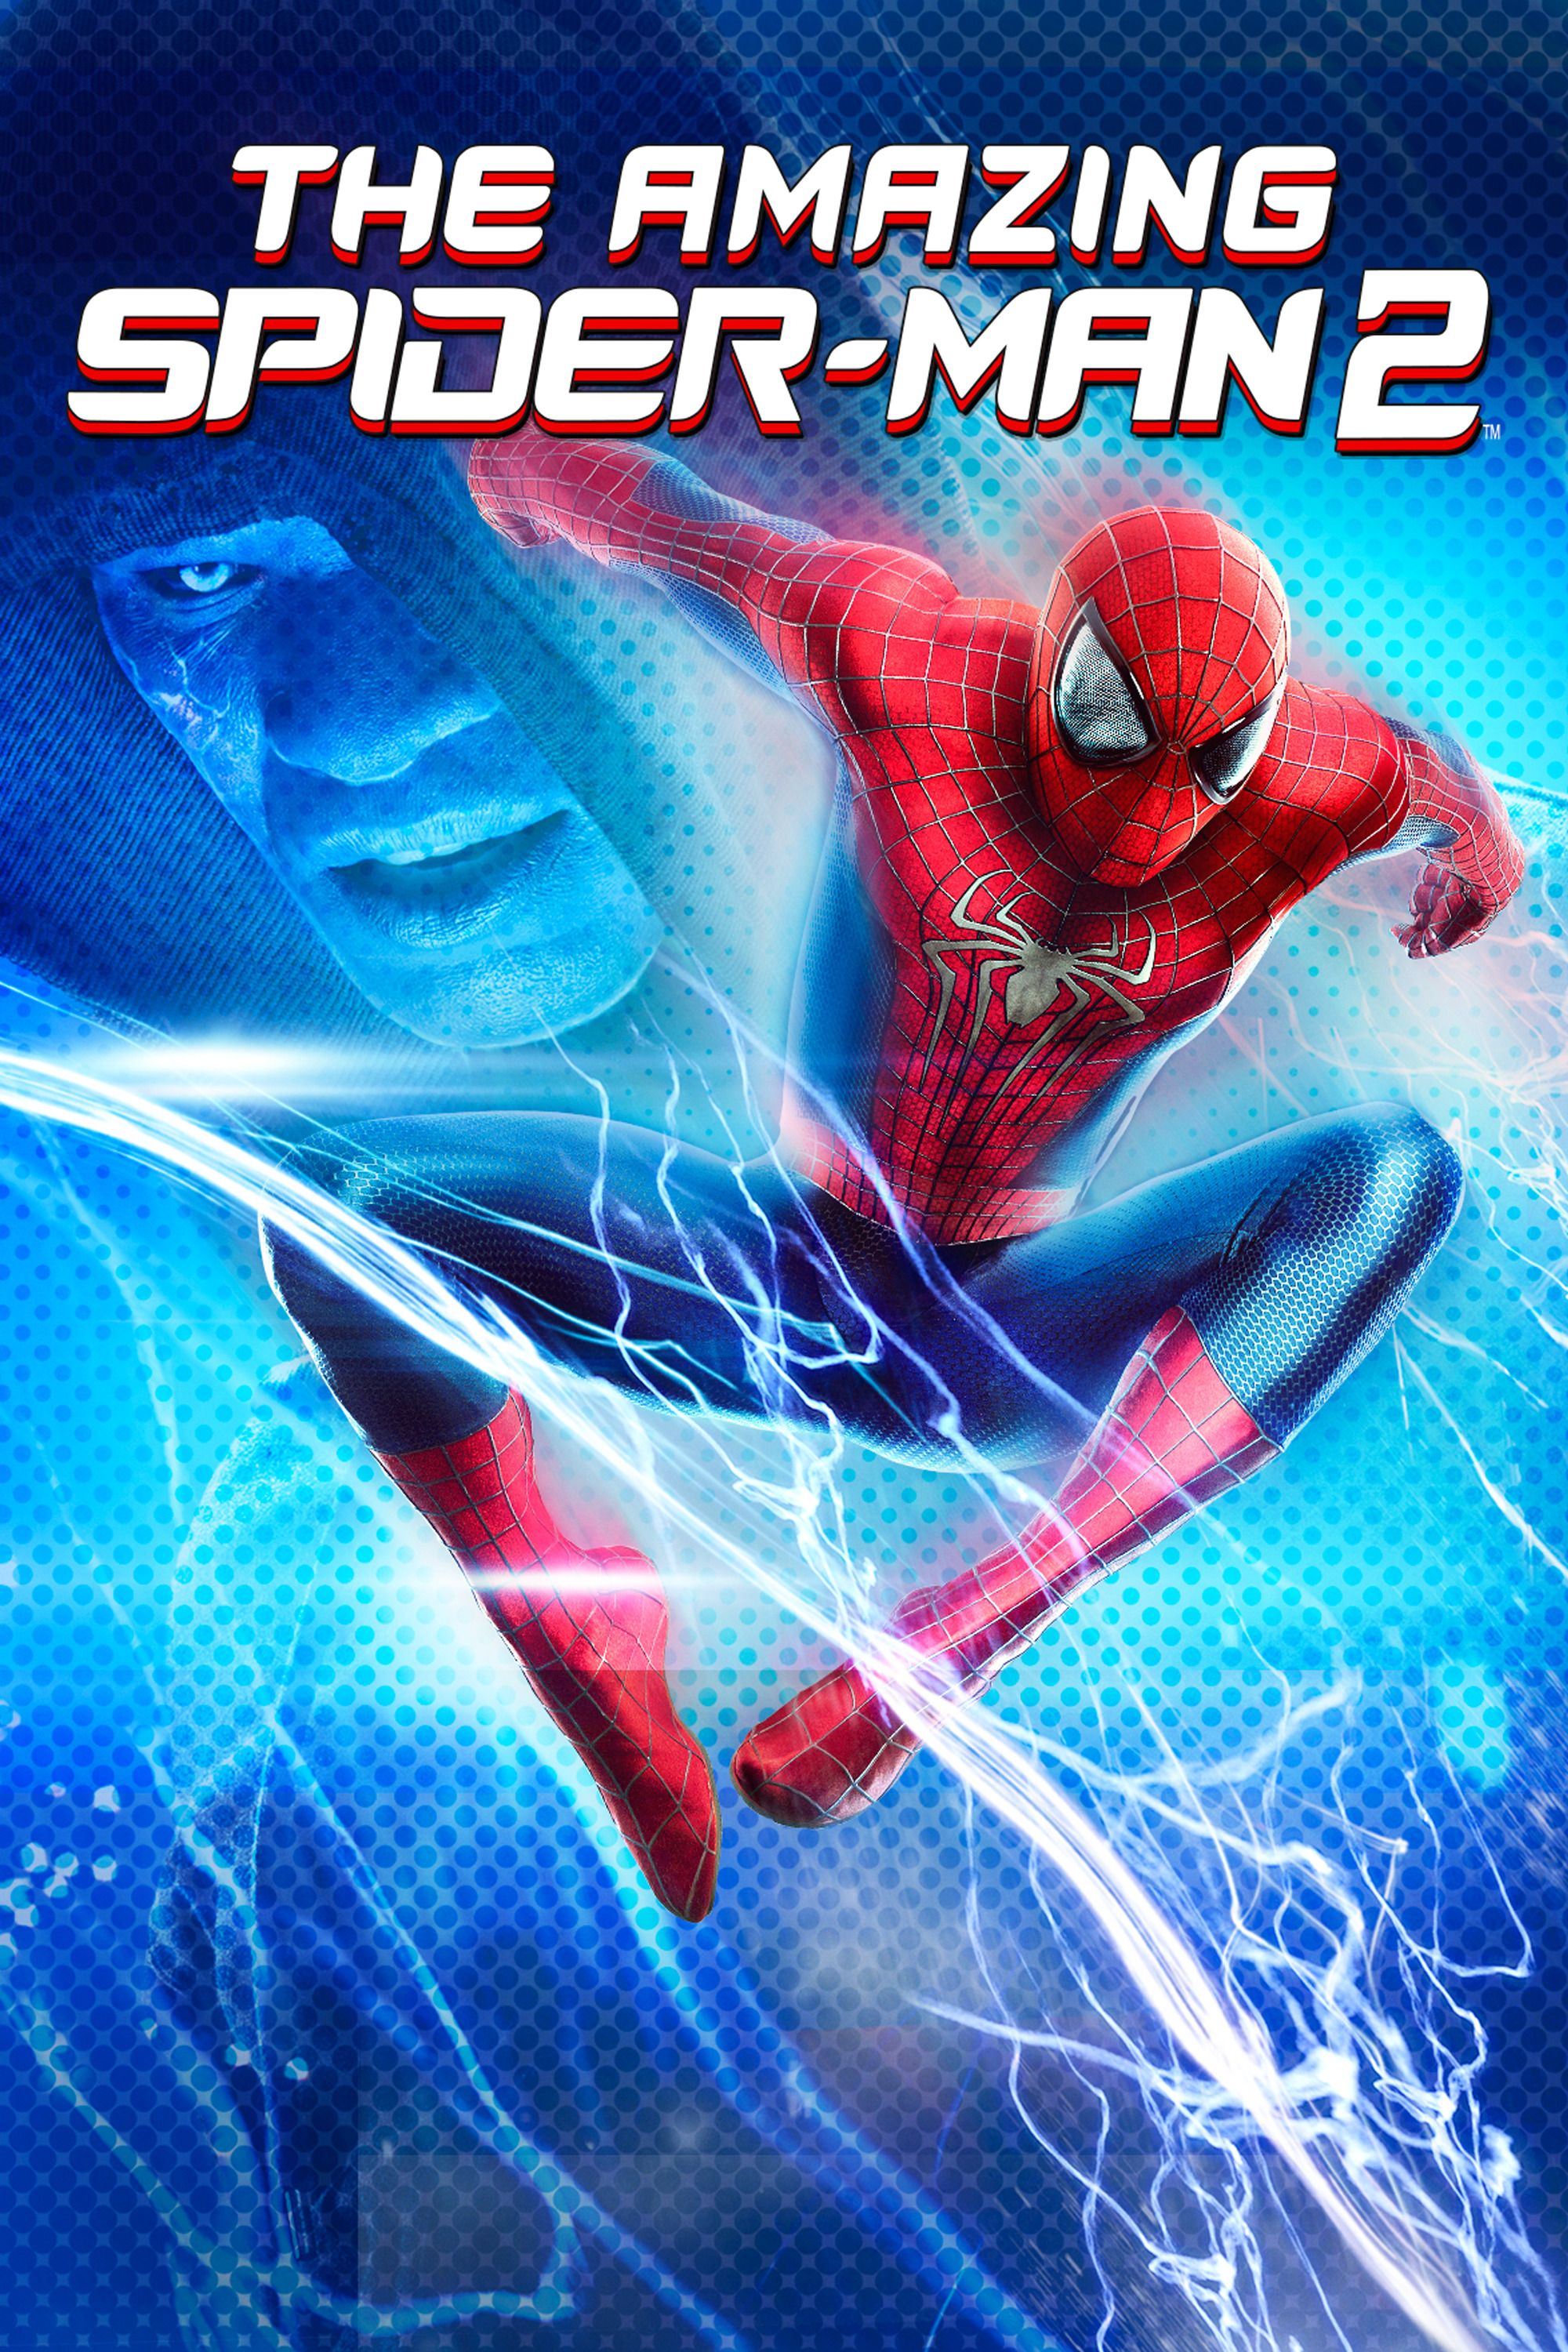 The amazing spider man full movie online free